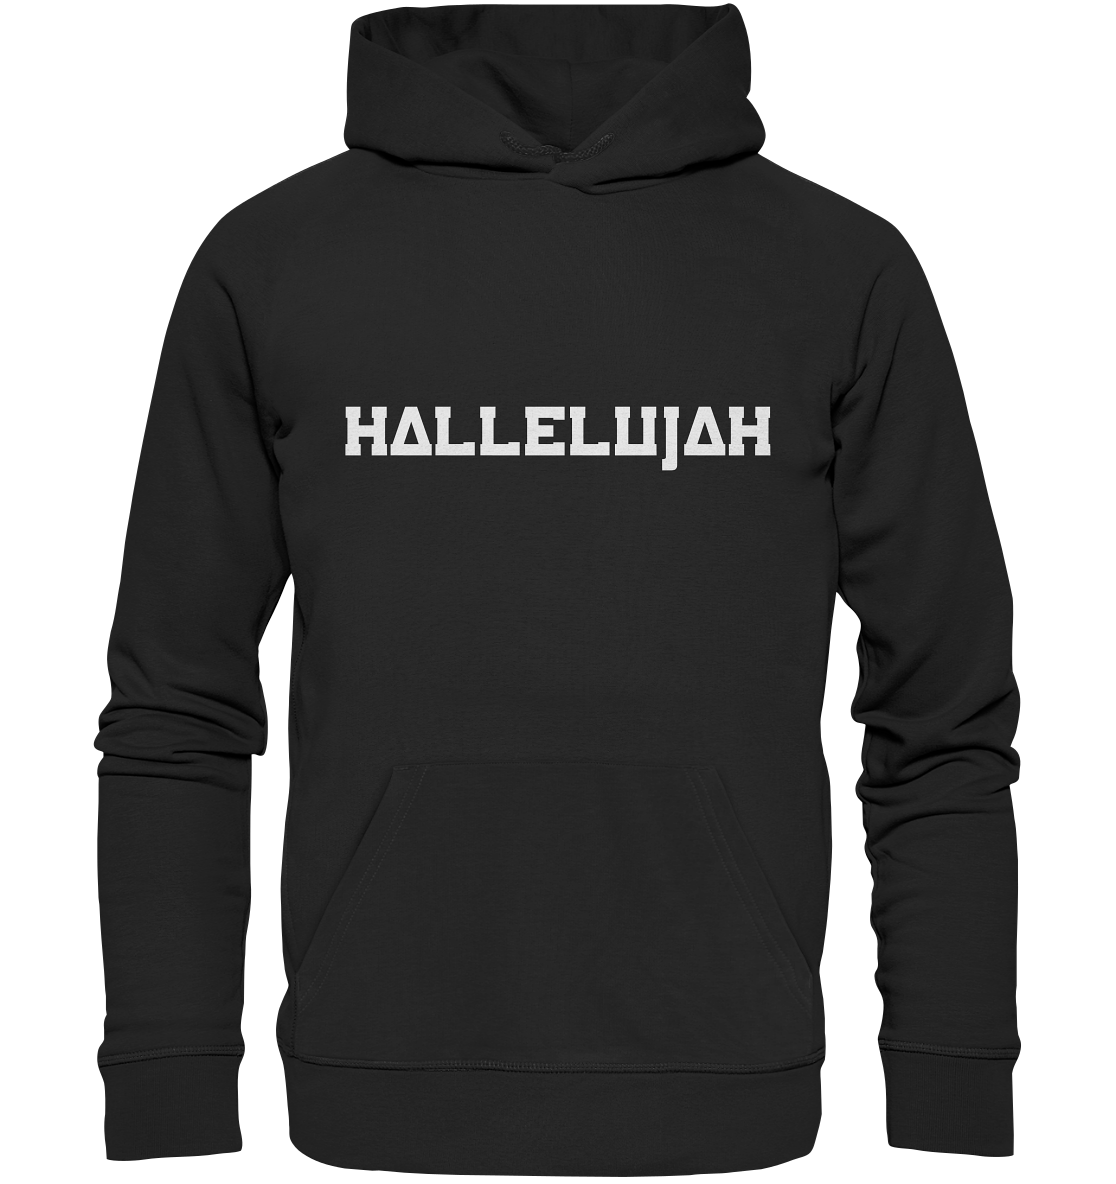 Hallelujah - Premium Unisex Hoodie